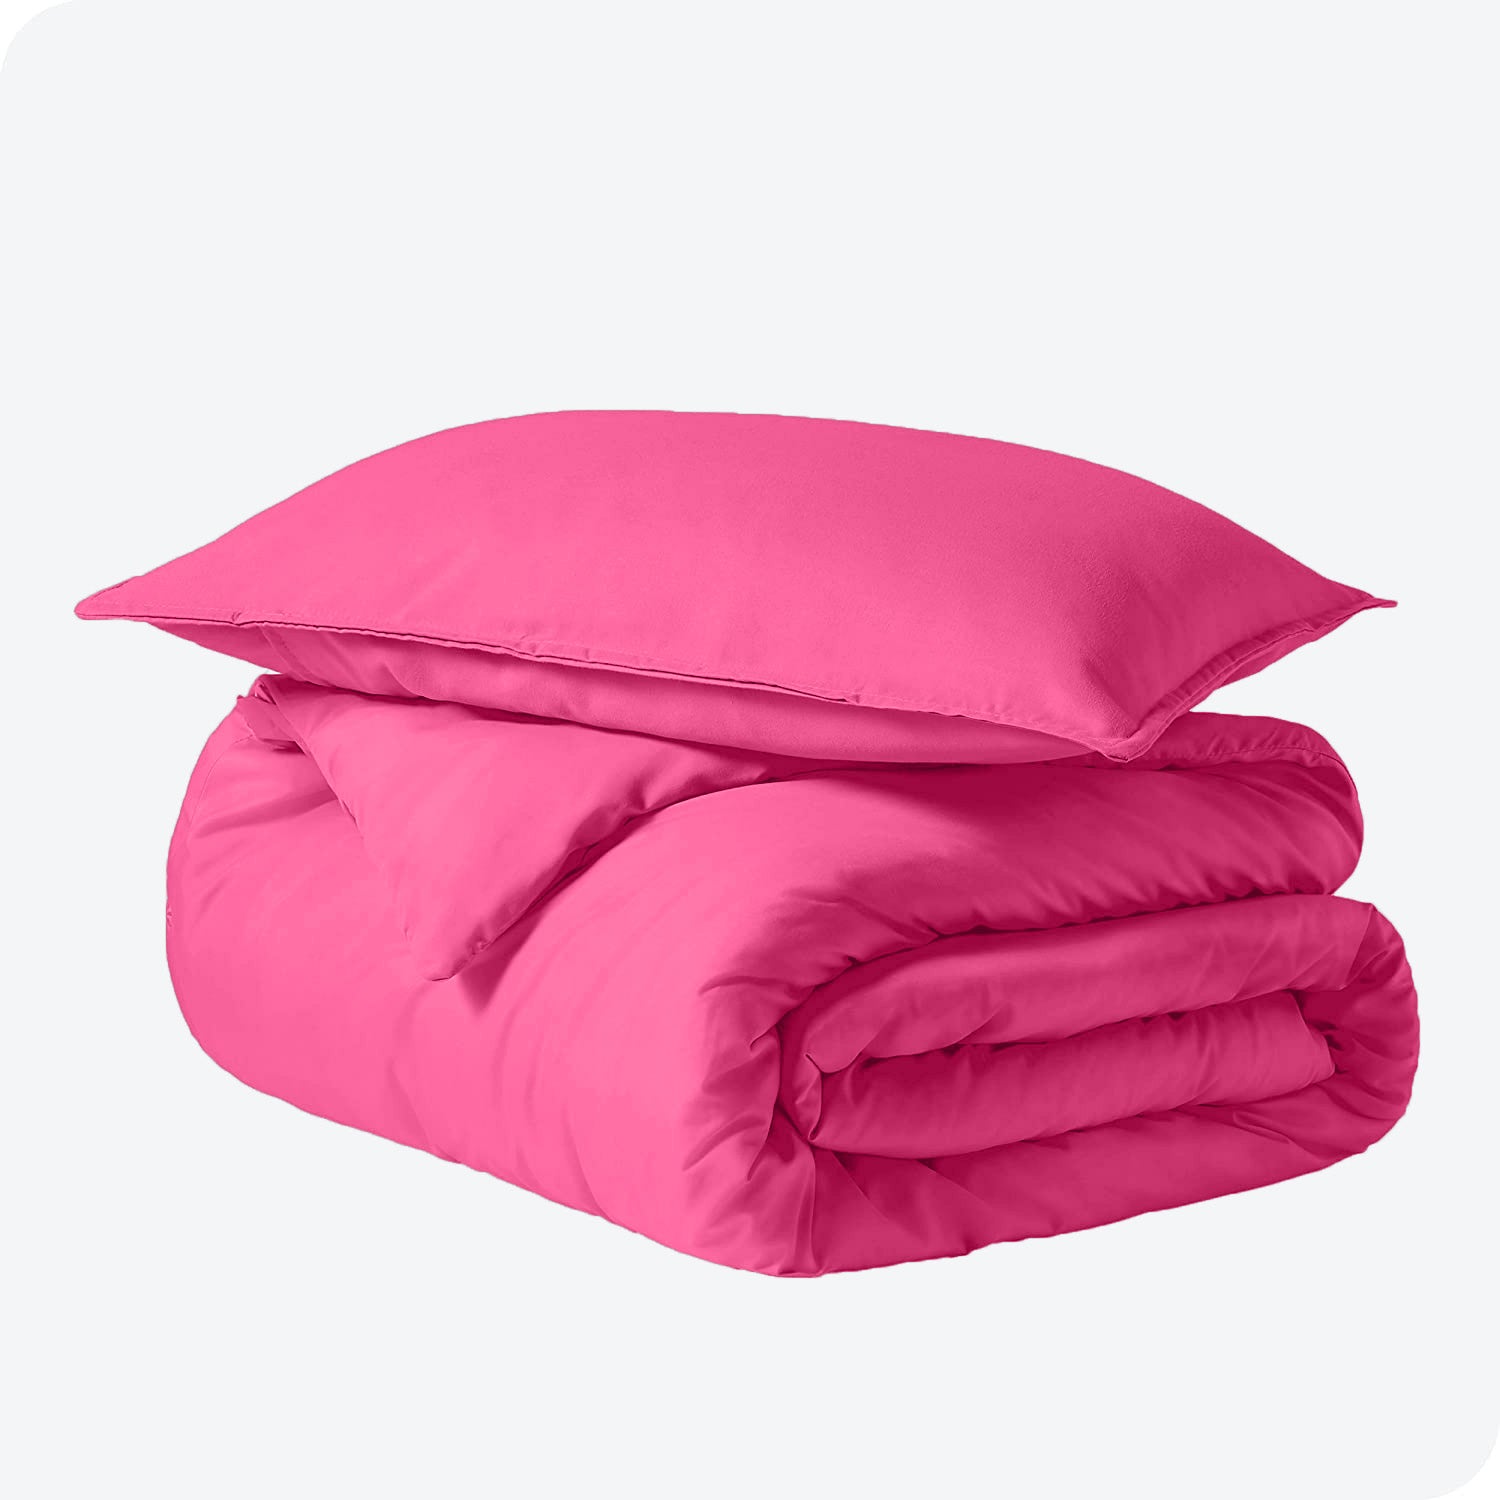 Pink Duvet Cover Plain Bedding Set